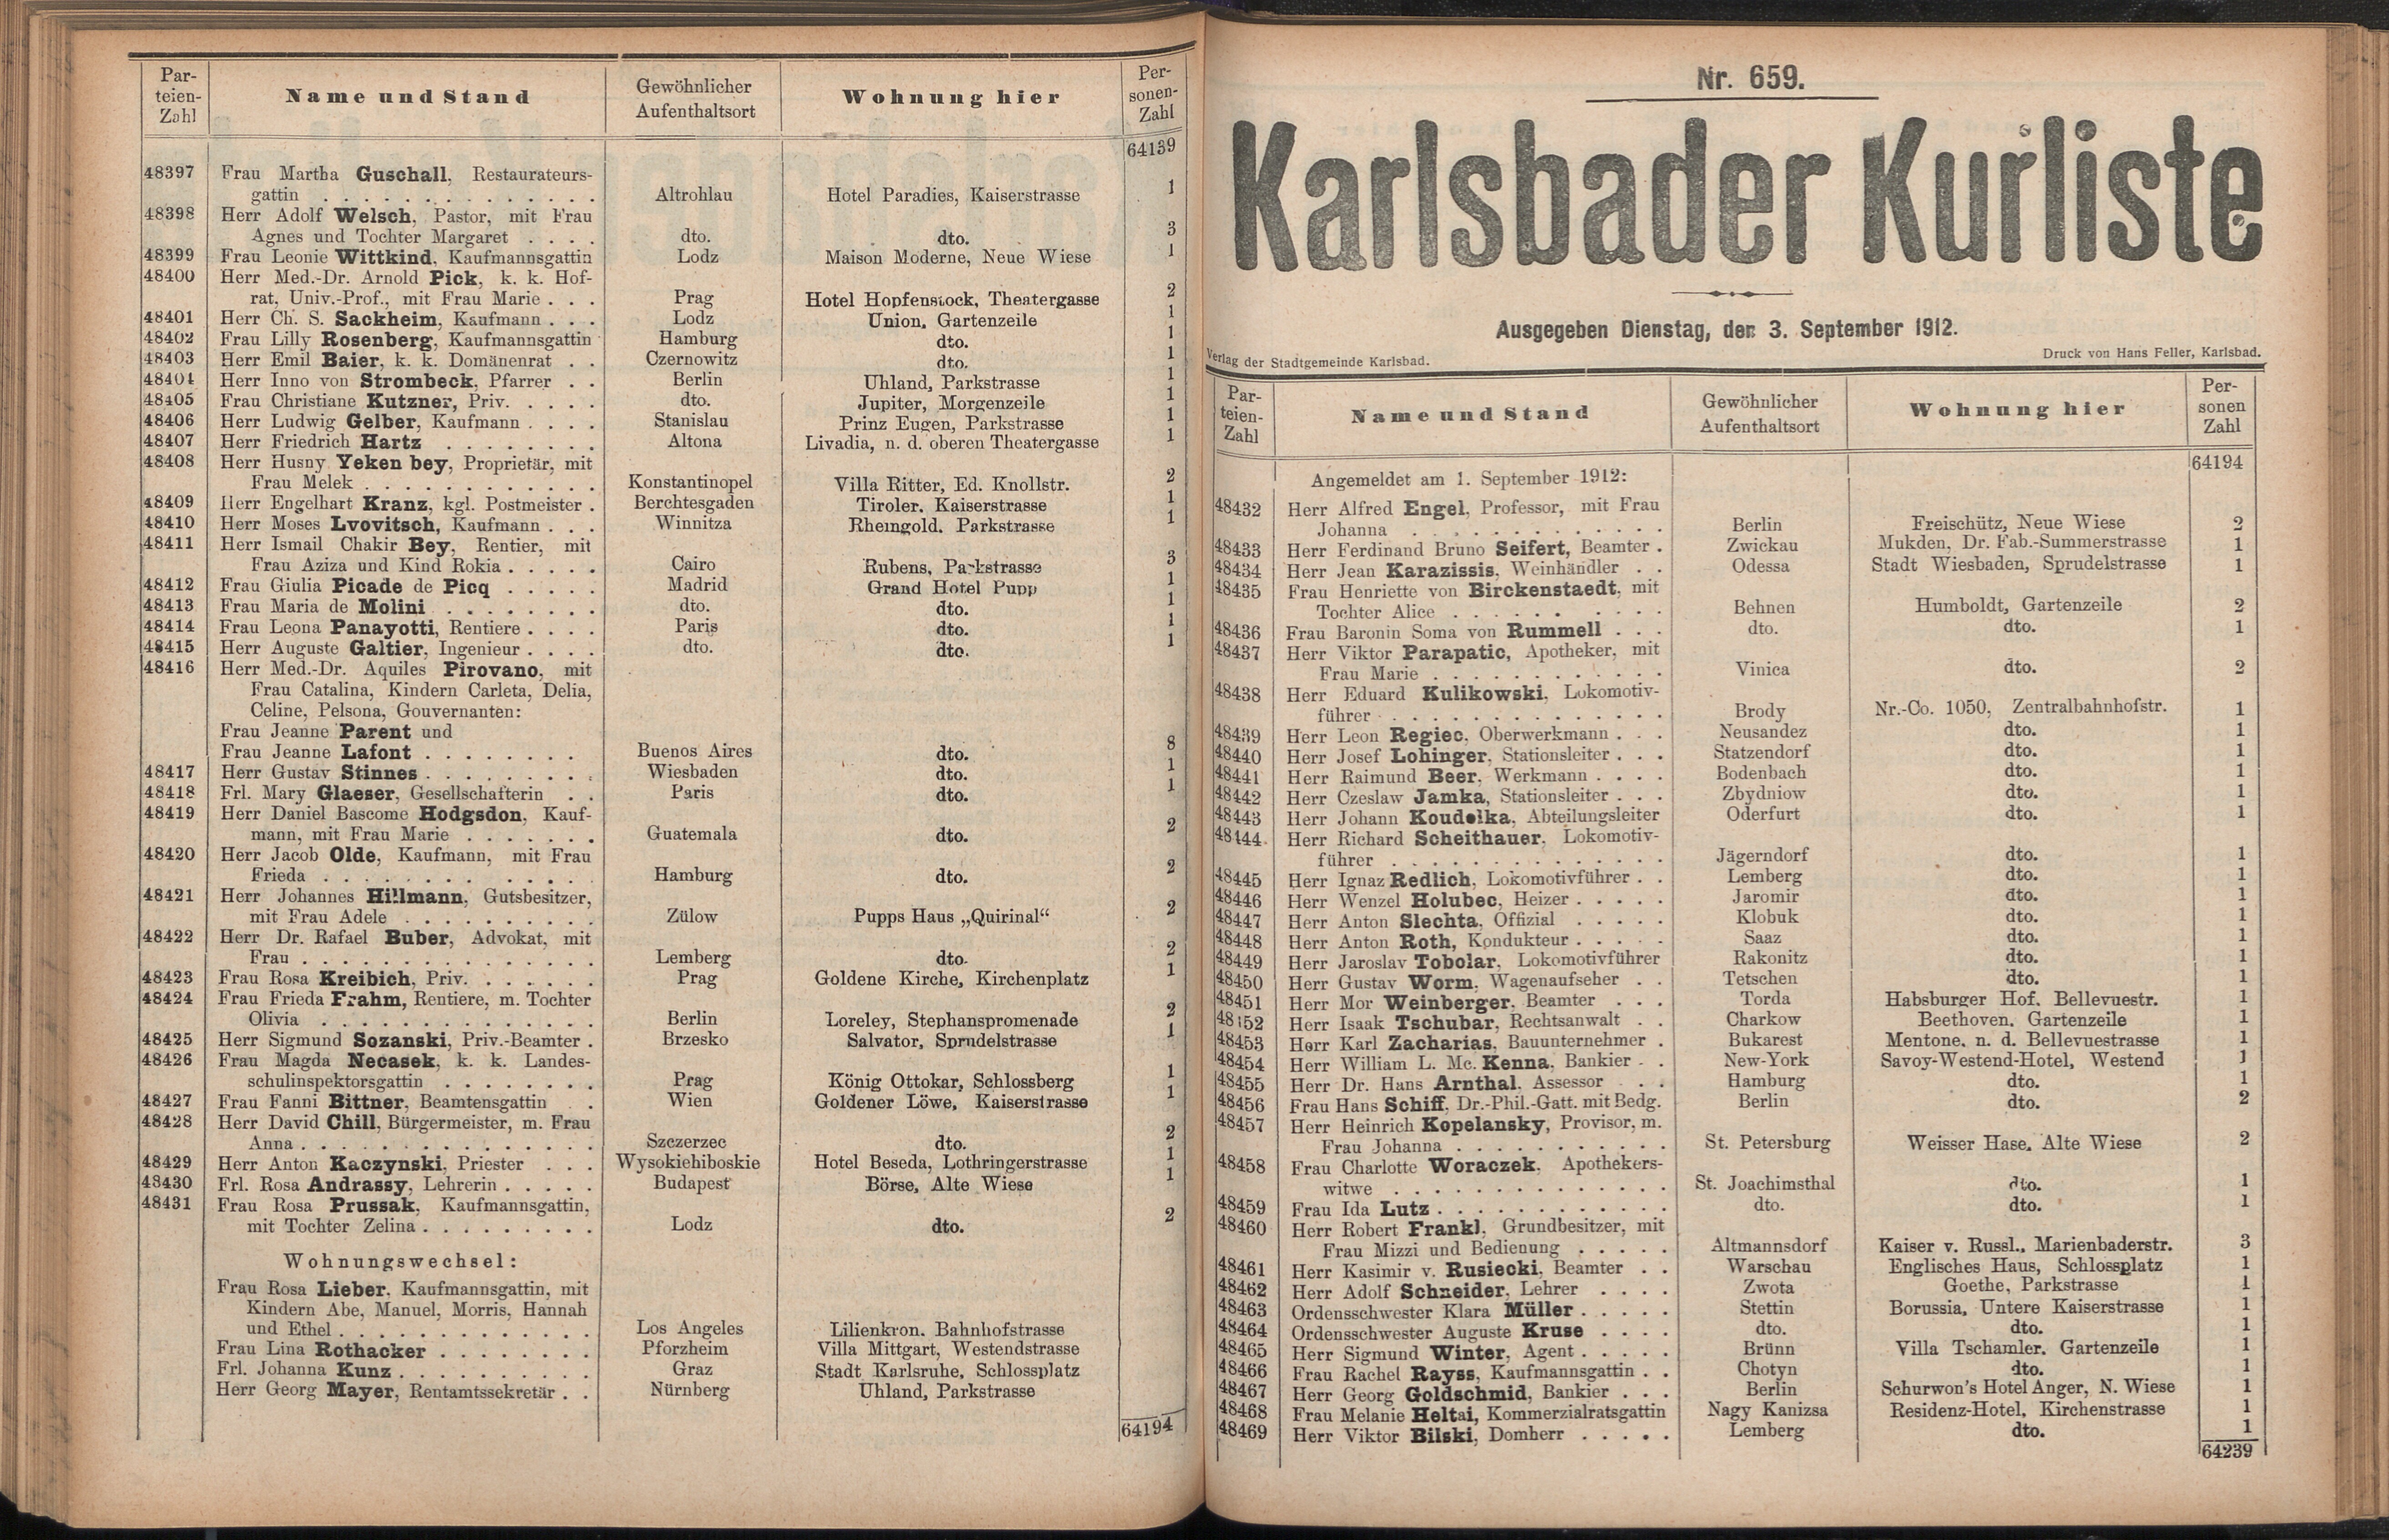 378. soap-kv_knihovna_karlsbader-kurliste-1912-2_3780